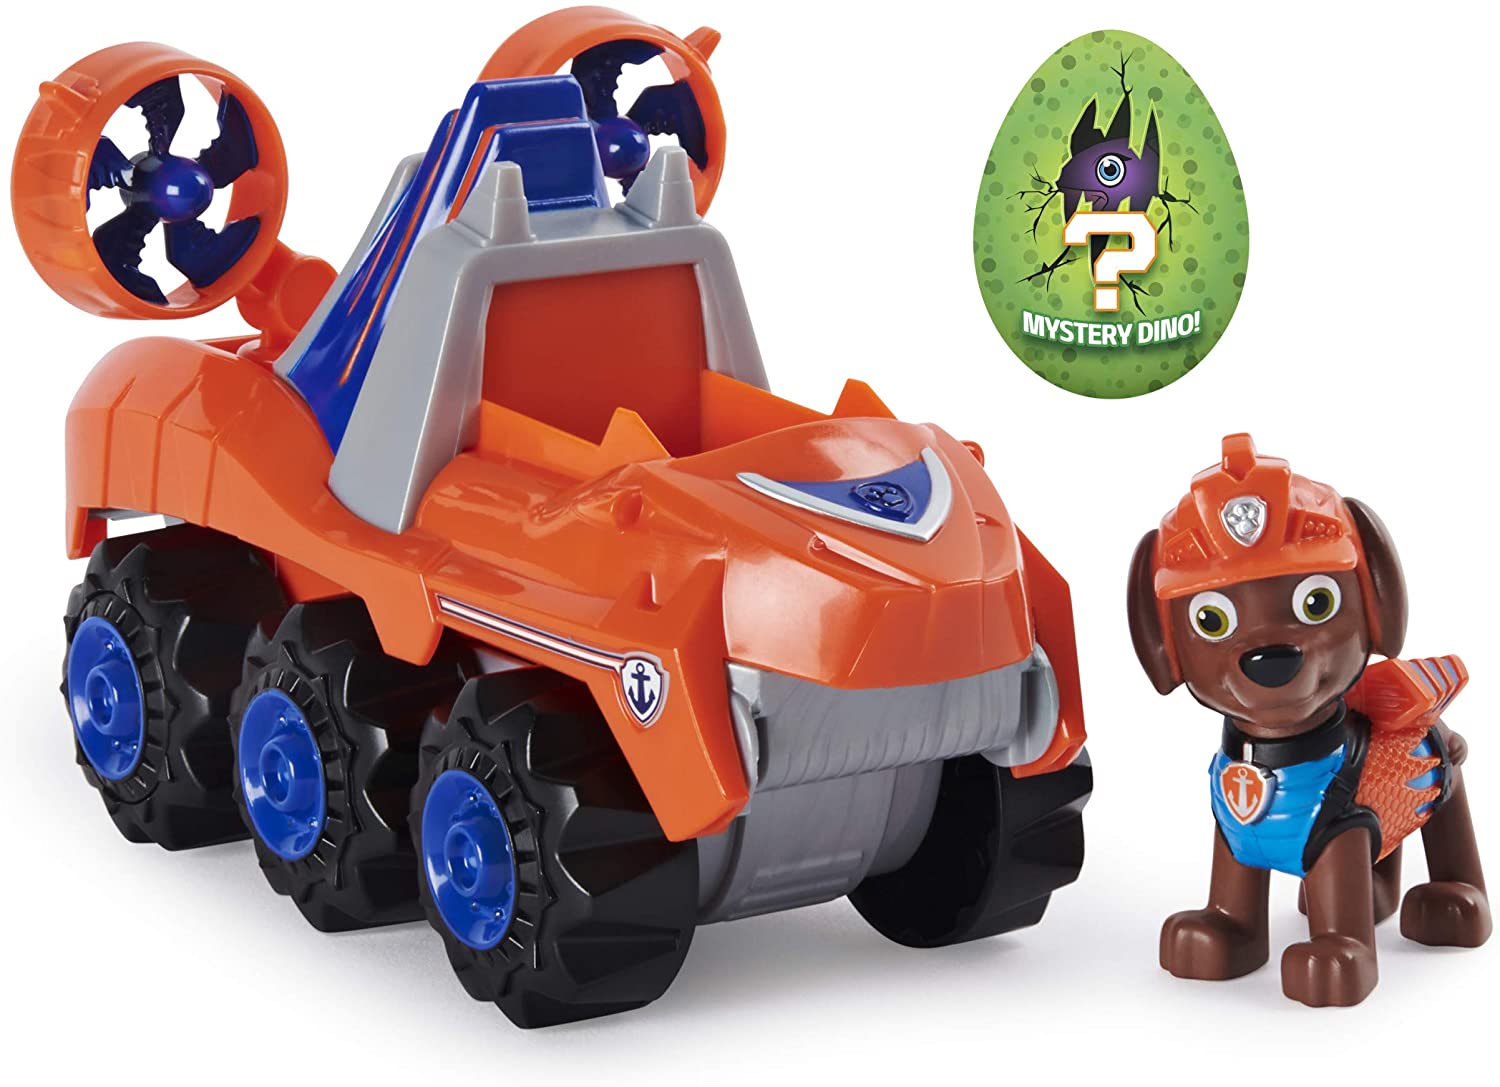 Vehicule + figurine stella dino rescue paw patrol